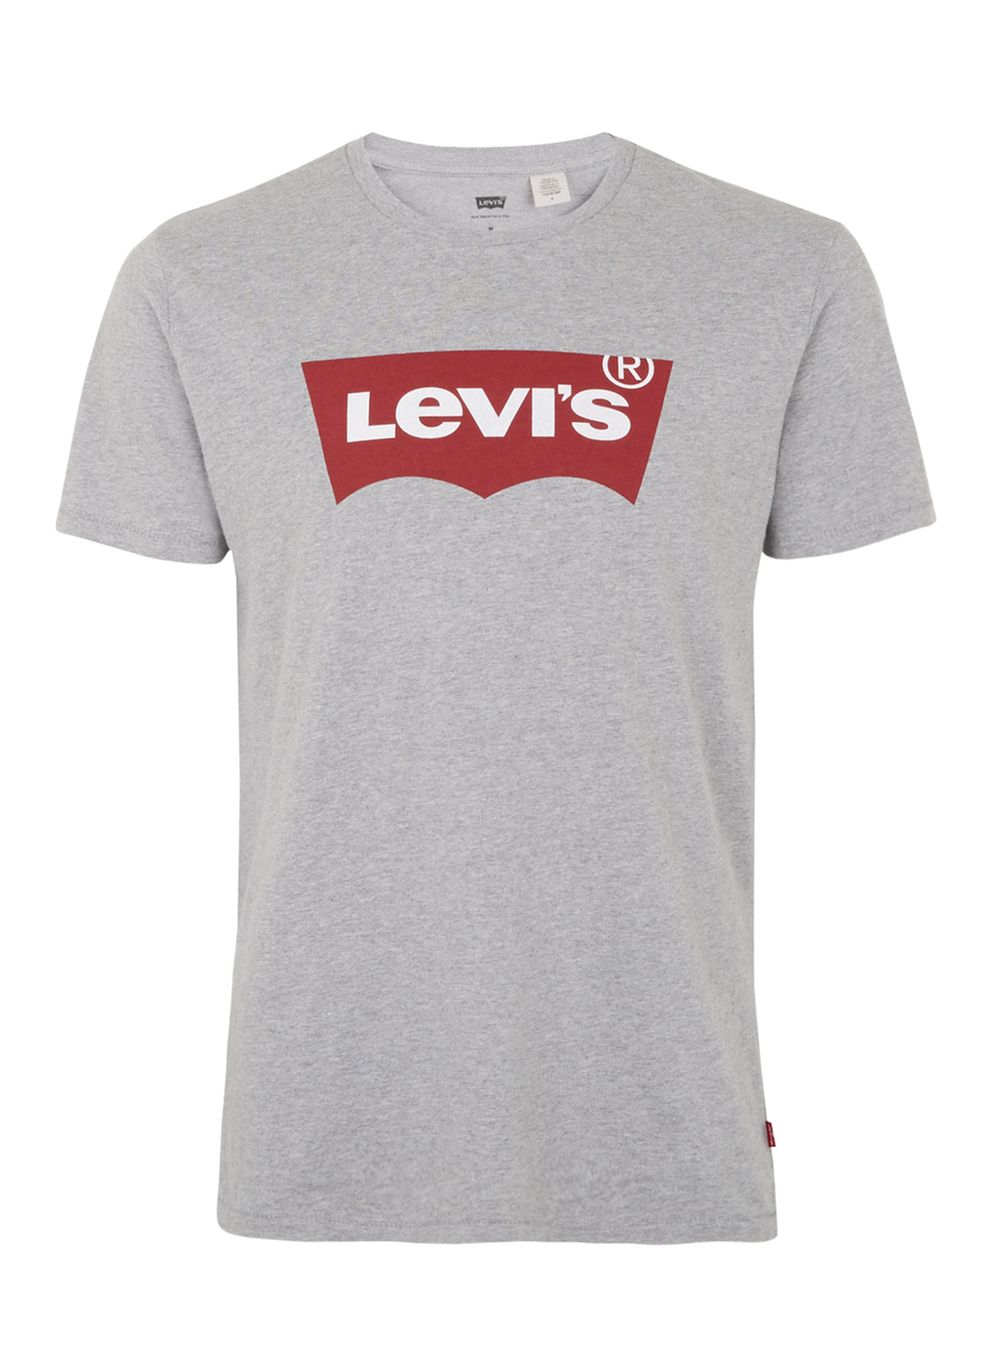 levis grey shirt